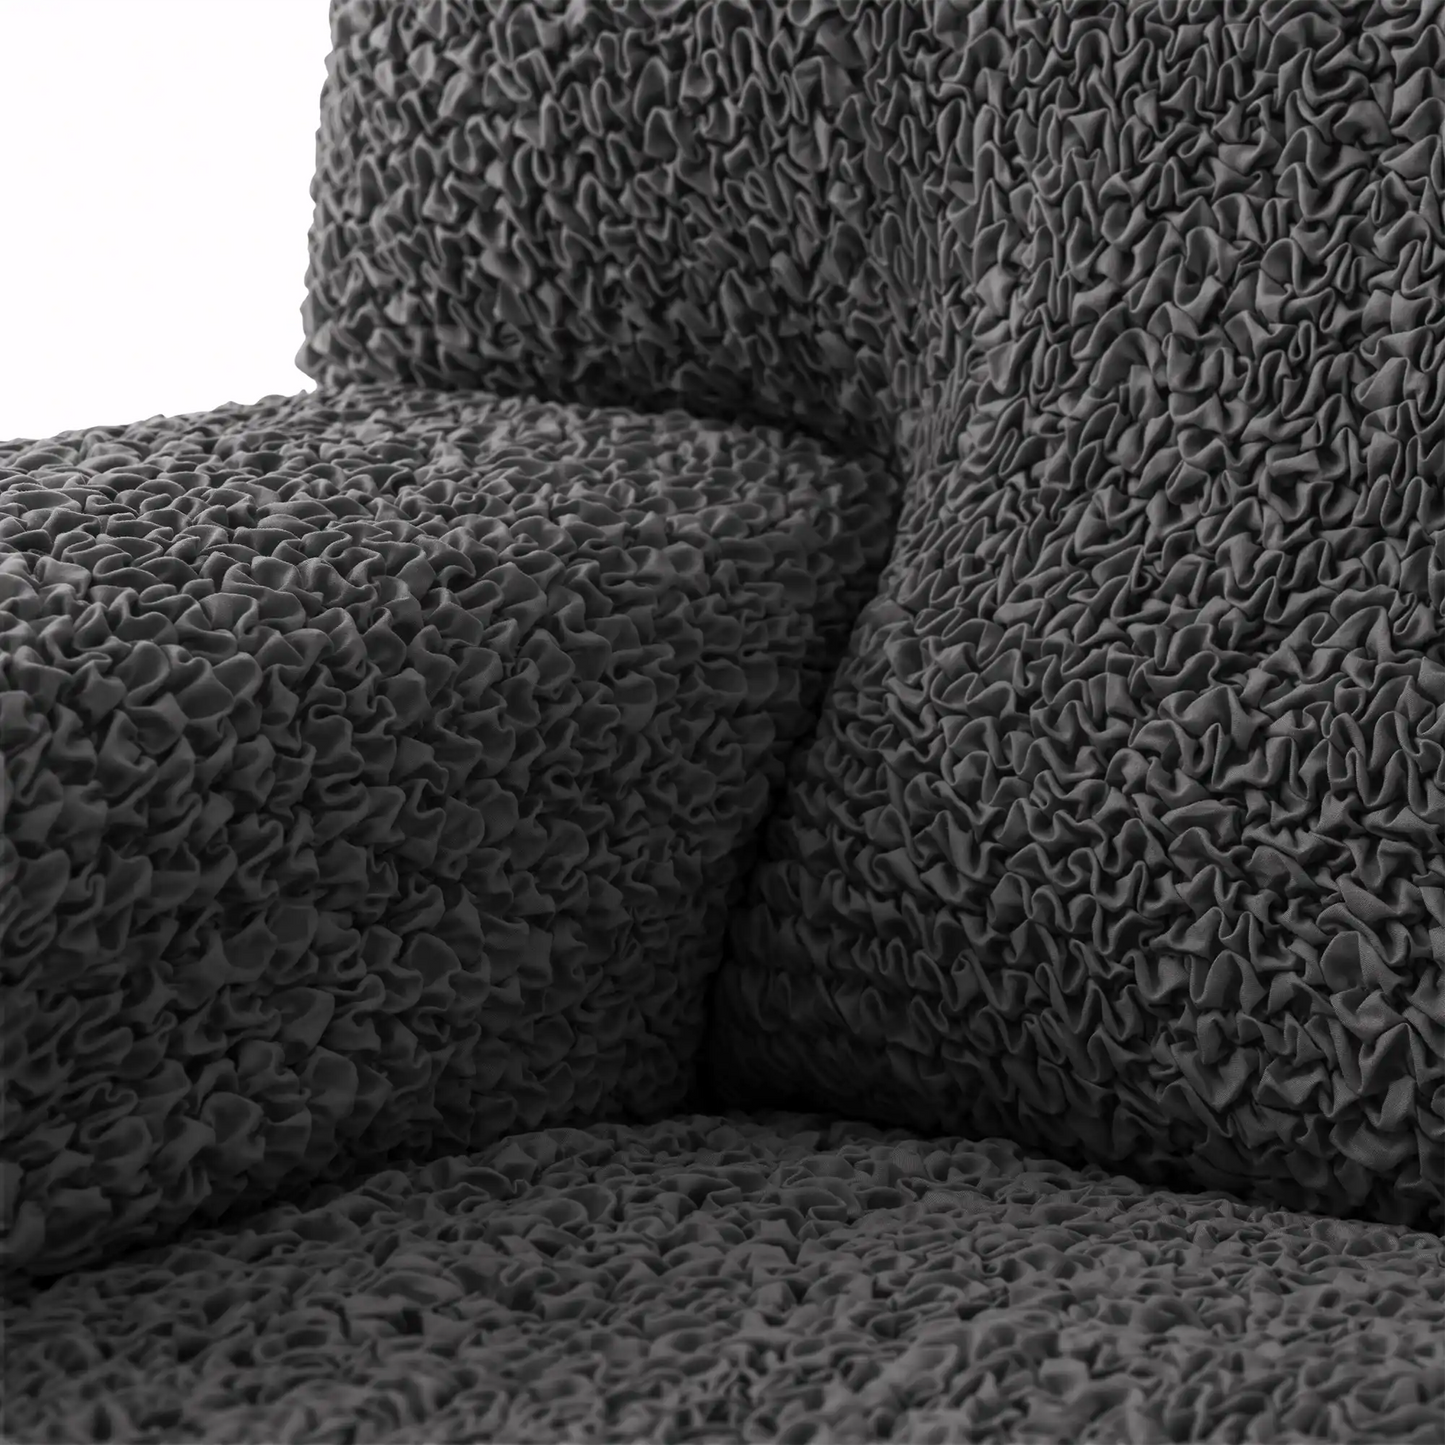 Corner Sofa Cover - Charcoal, Microfibra